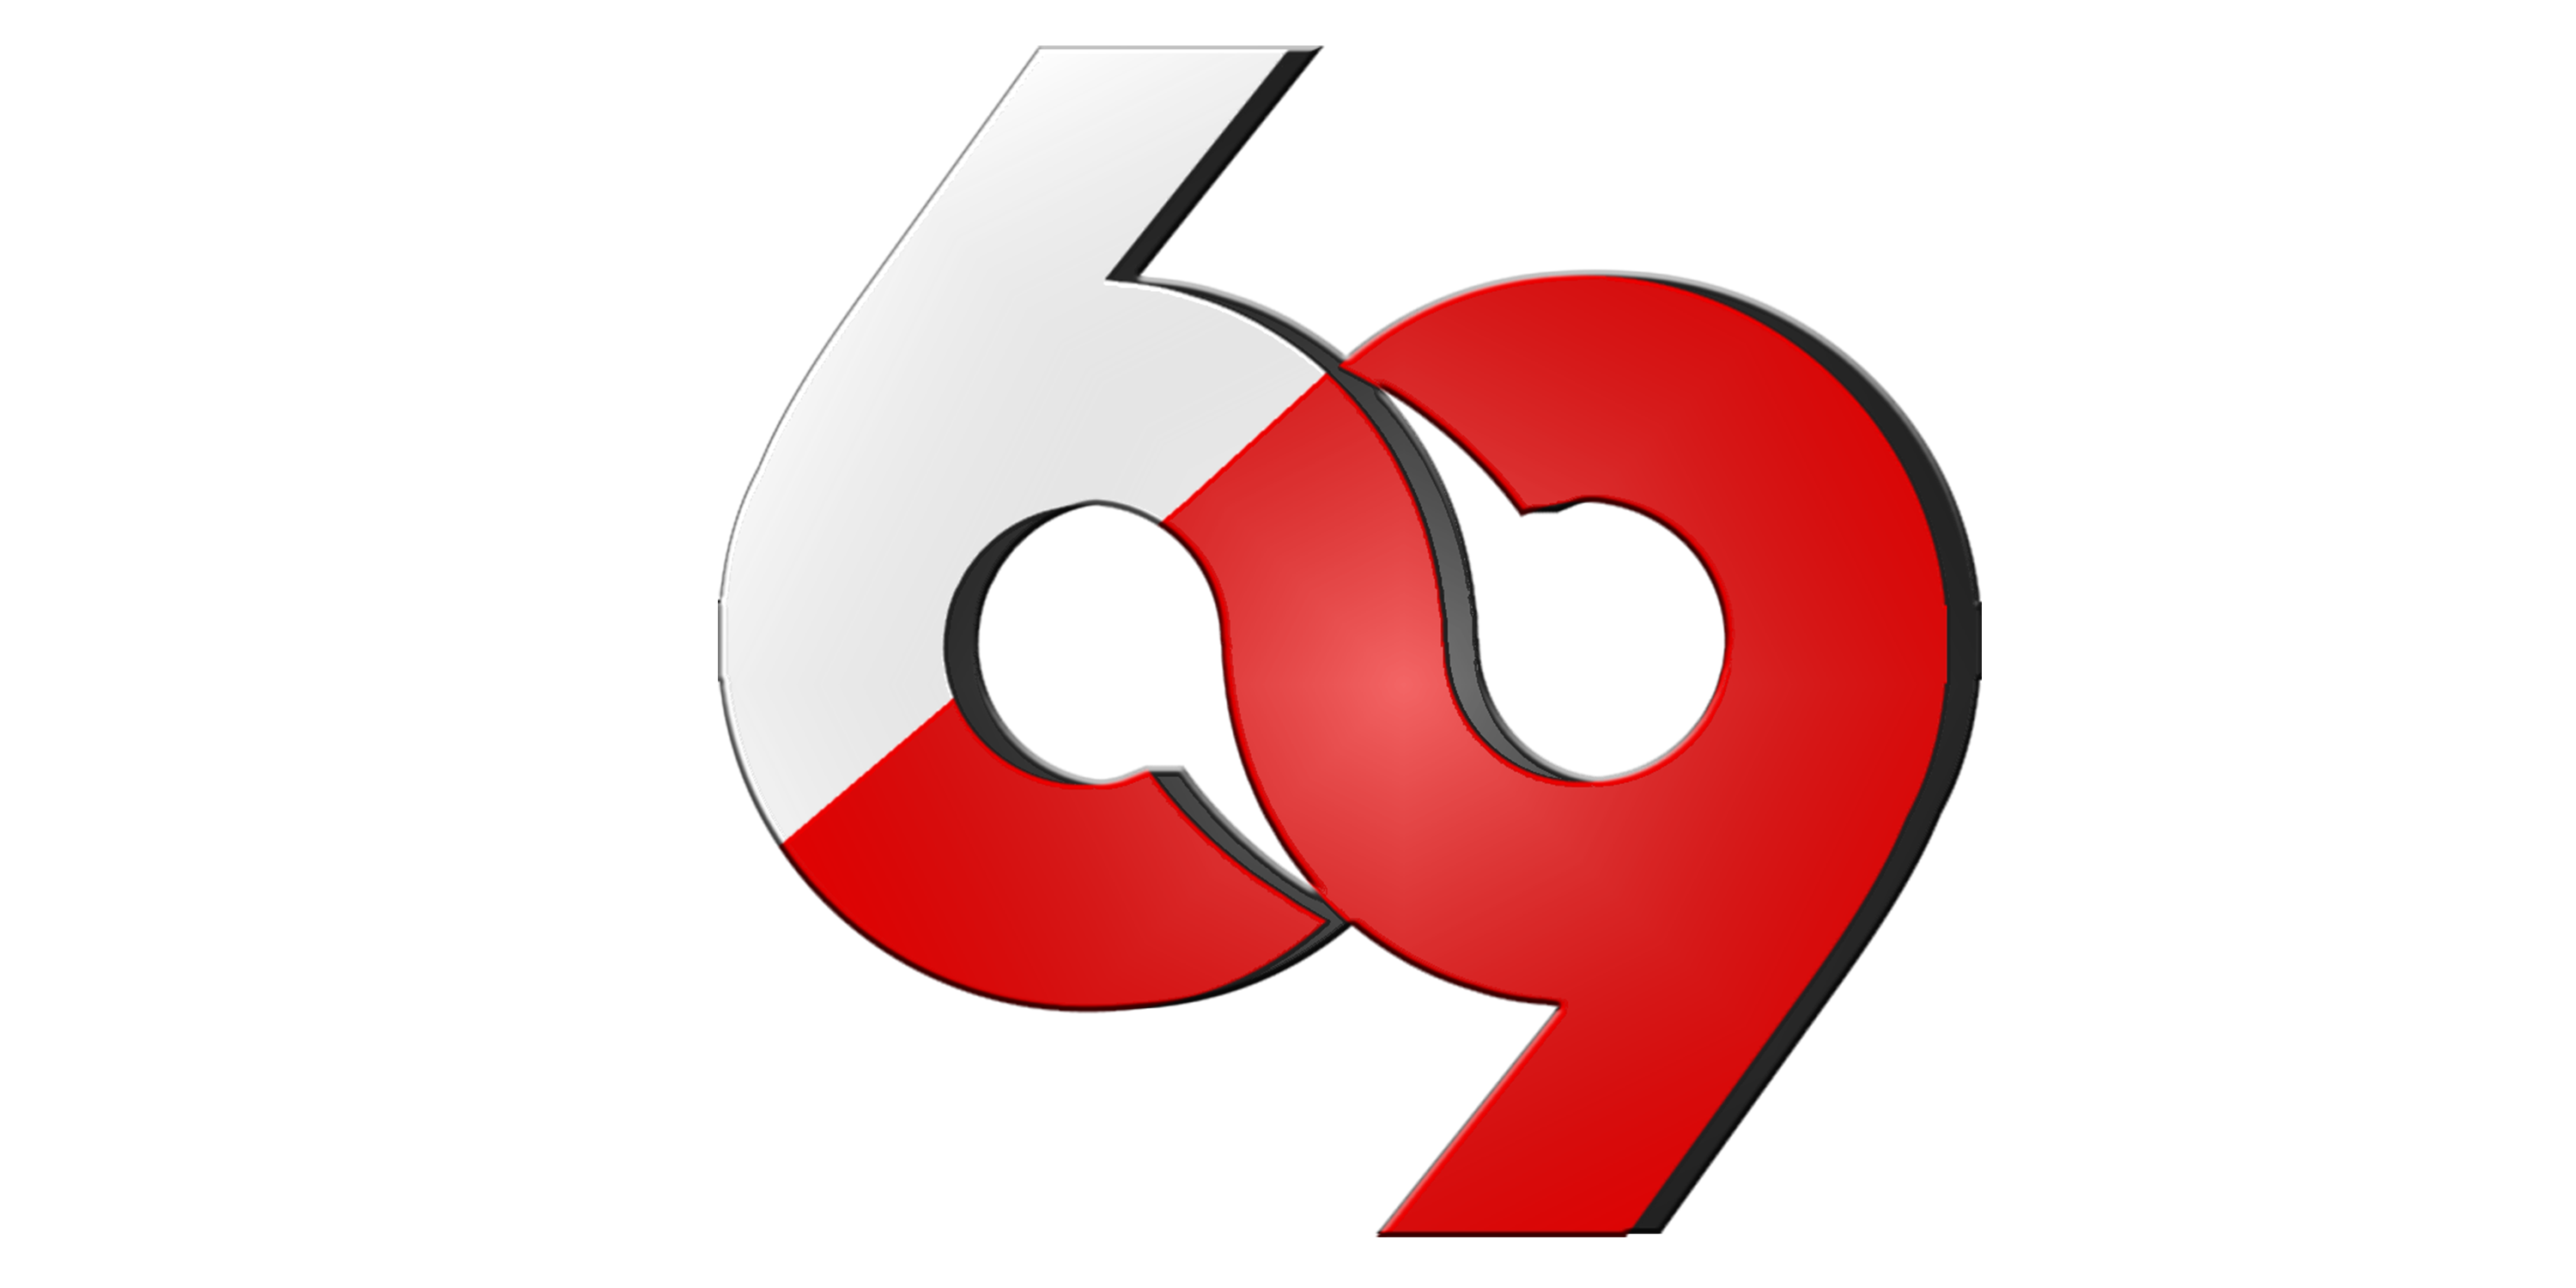 69 logo